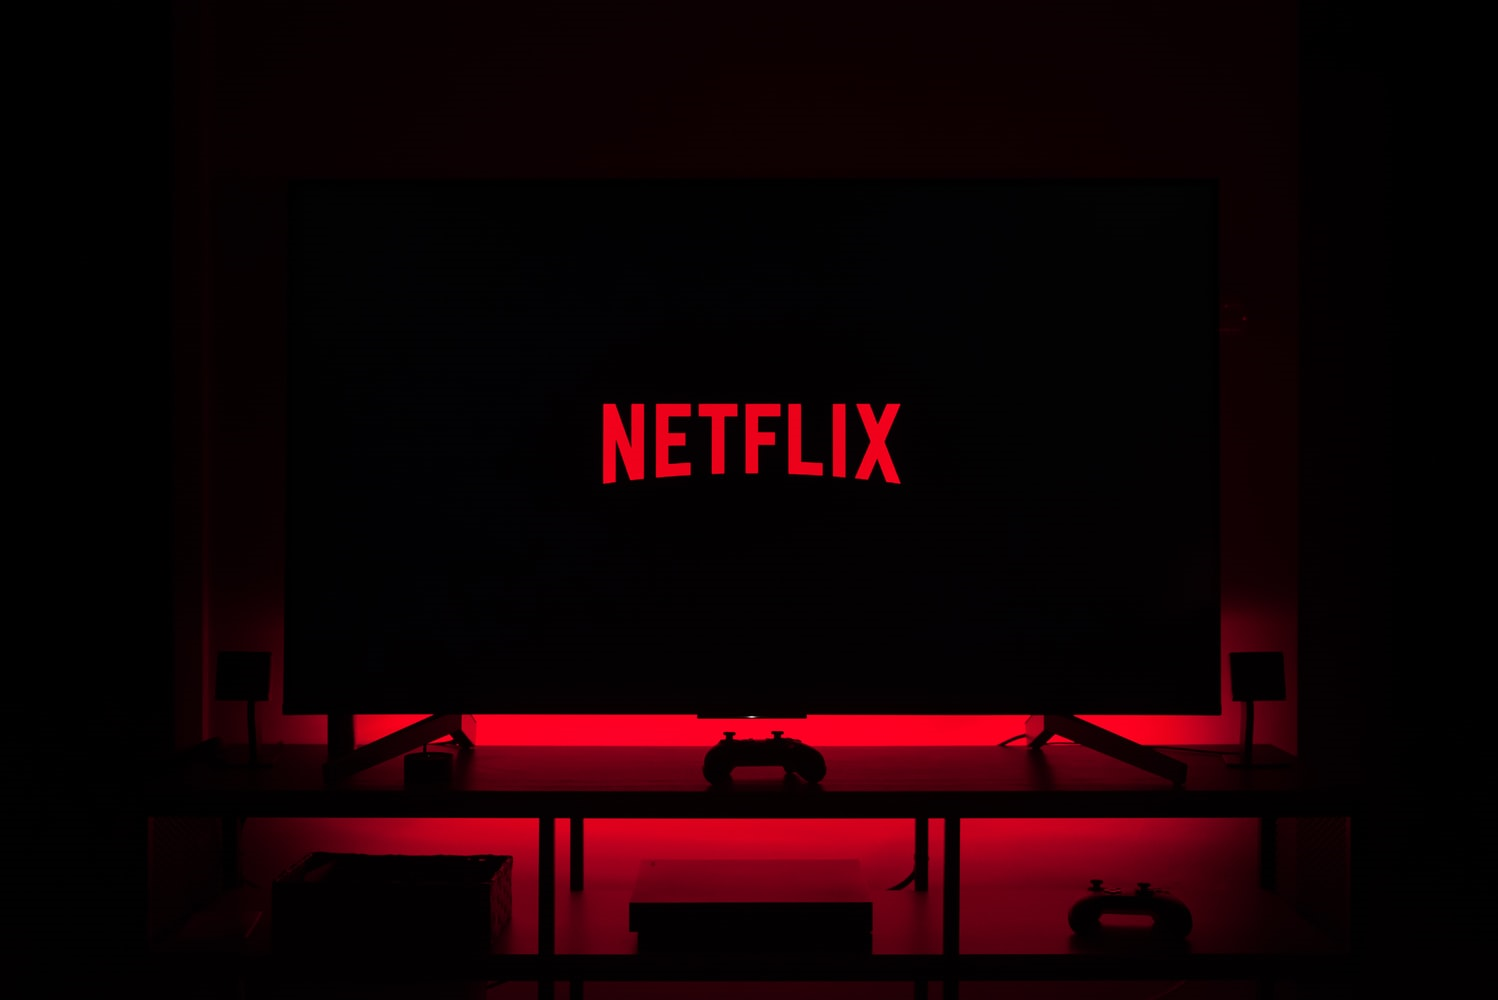 Netflix Logo on a Television